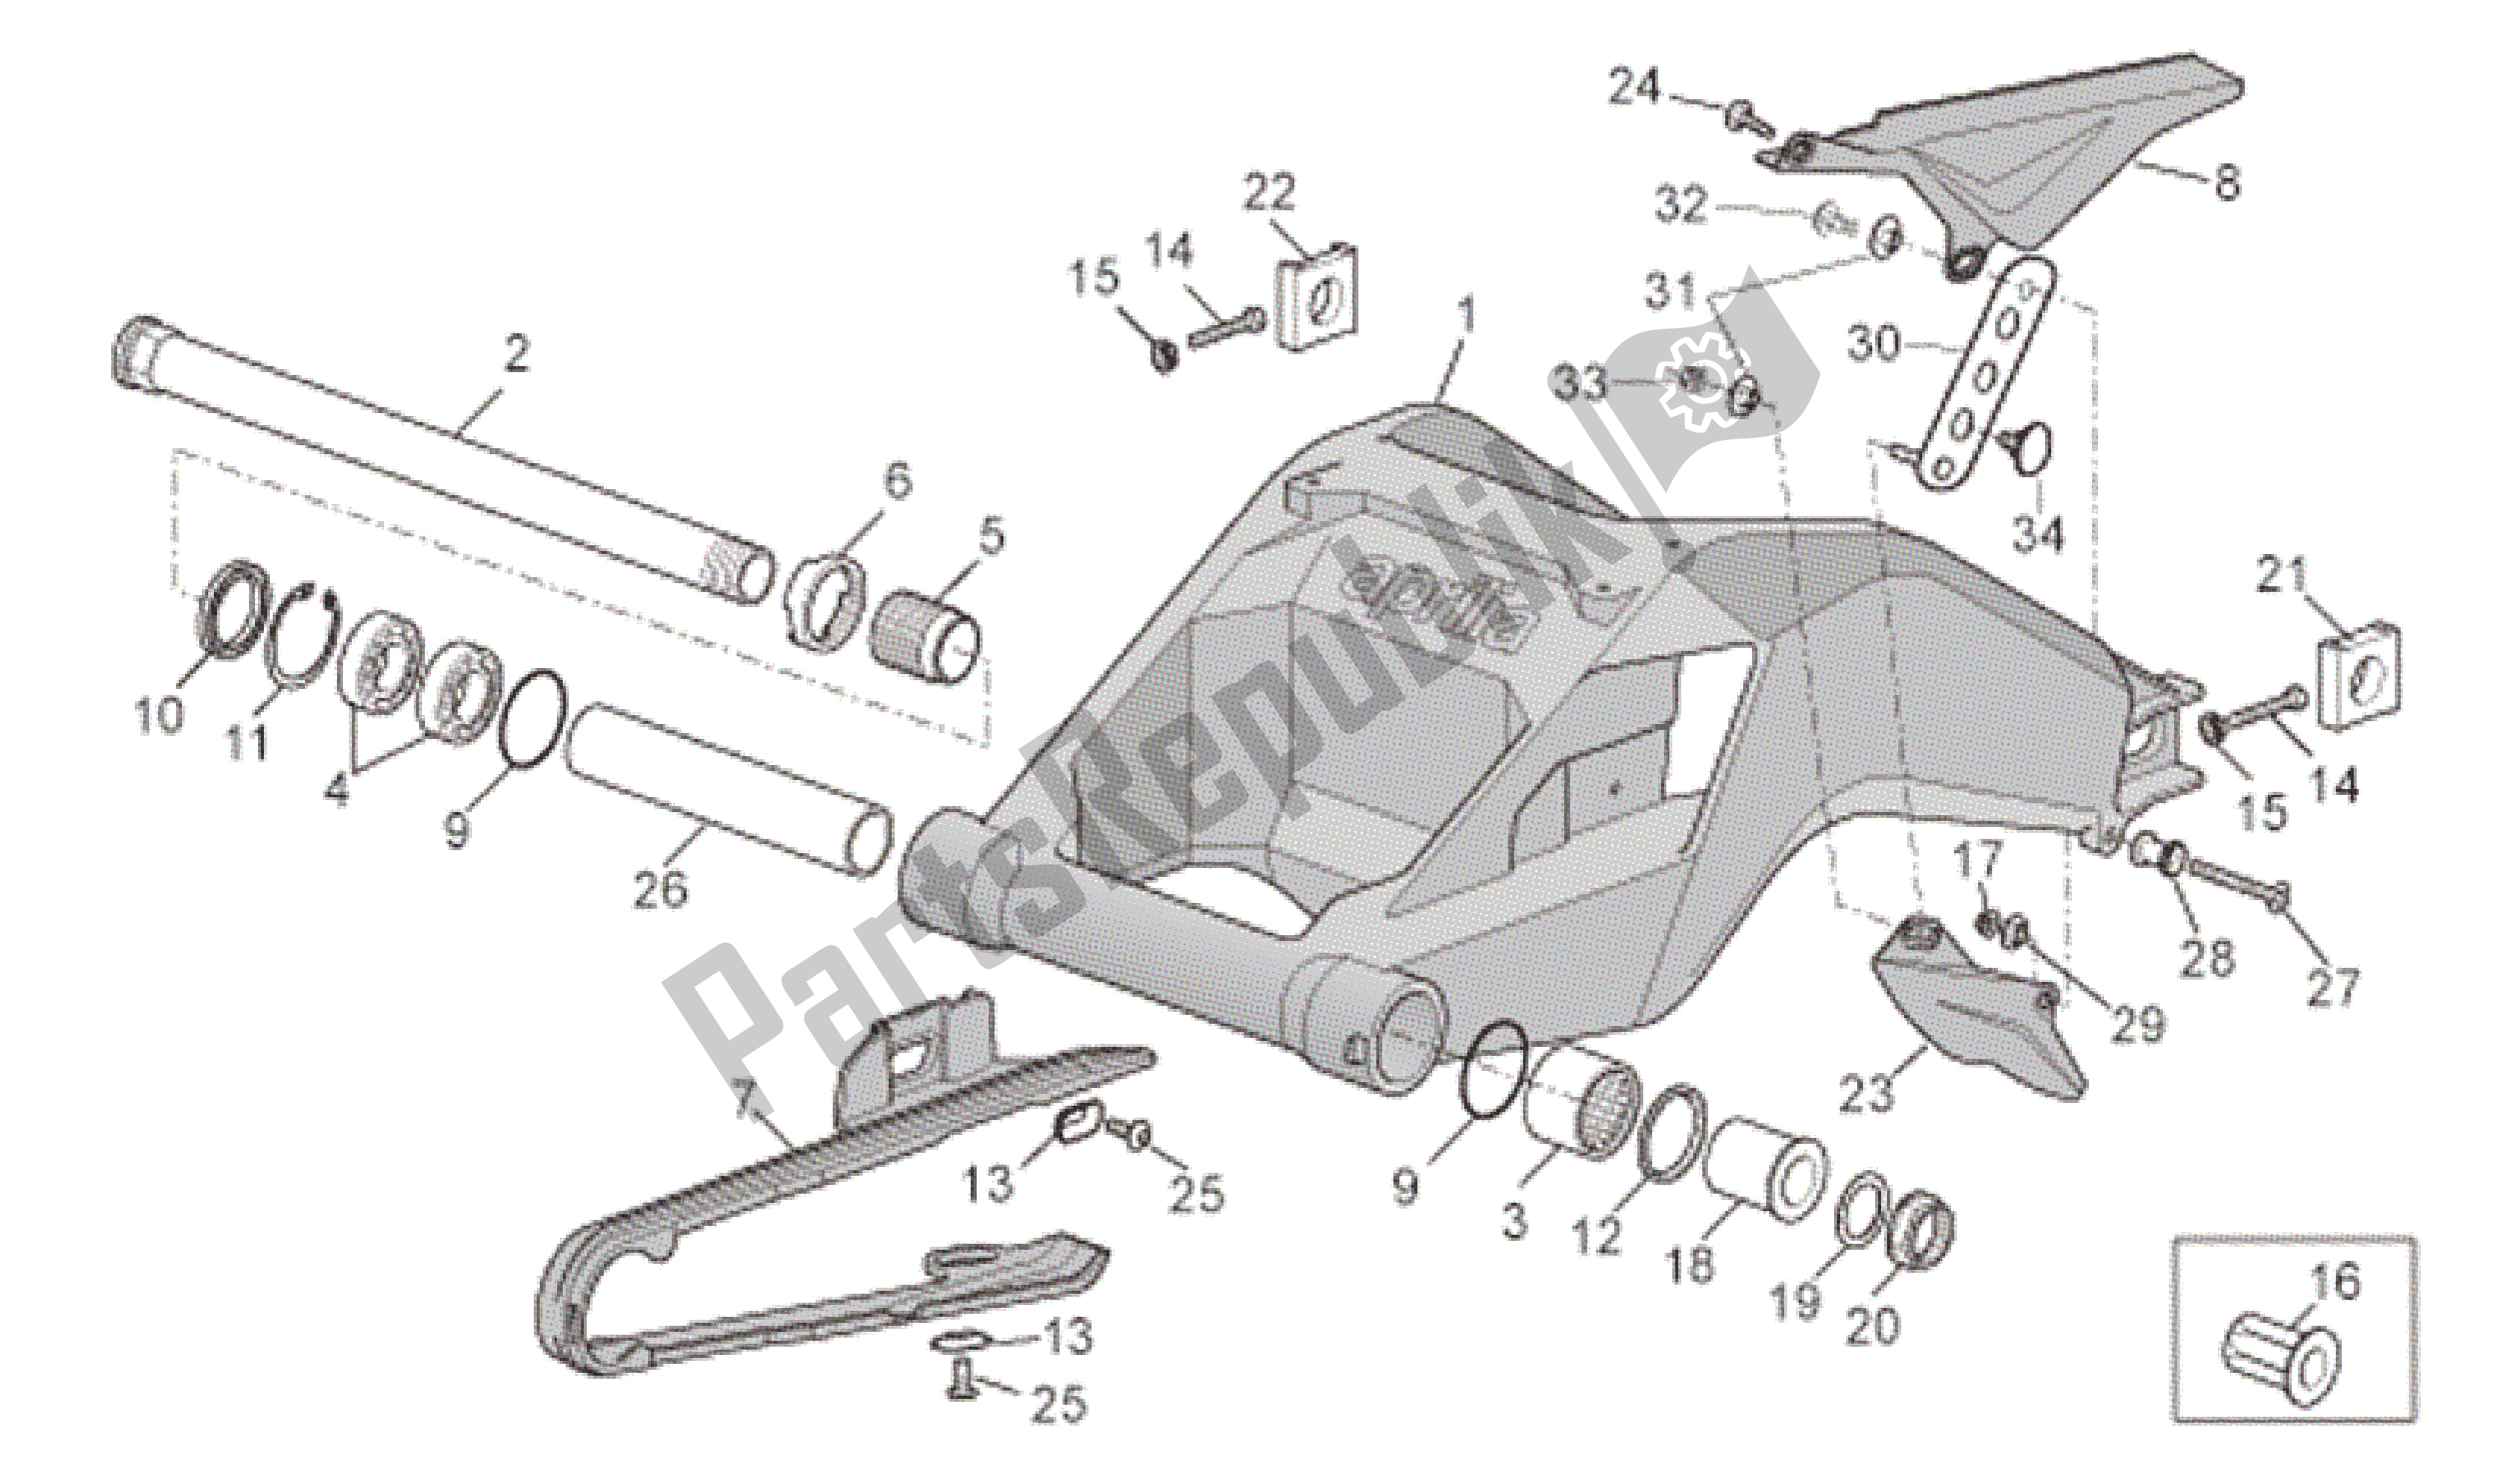 All parts for the Swing Arm of the Aprilia RSV Tuono R 3985 1000 2006 - 2009